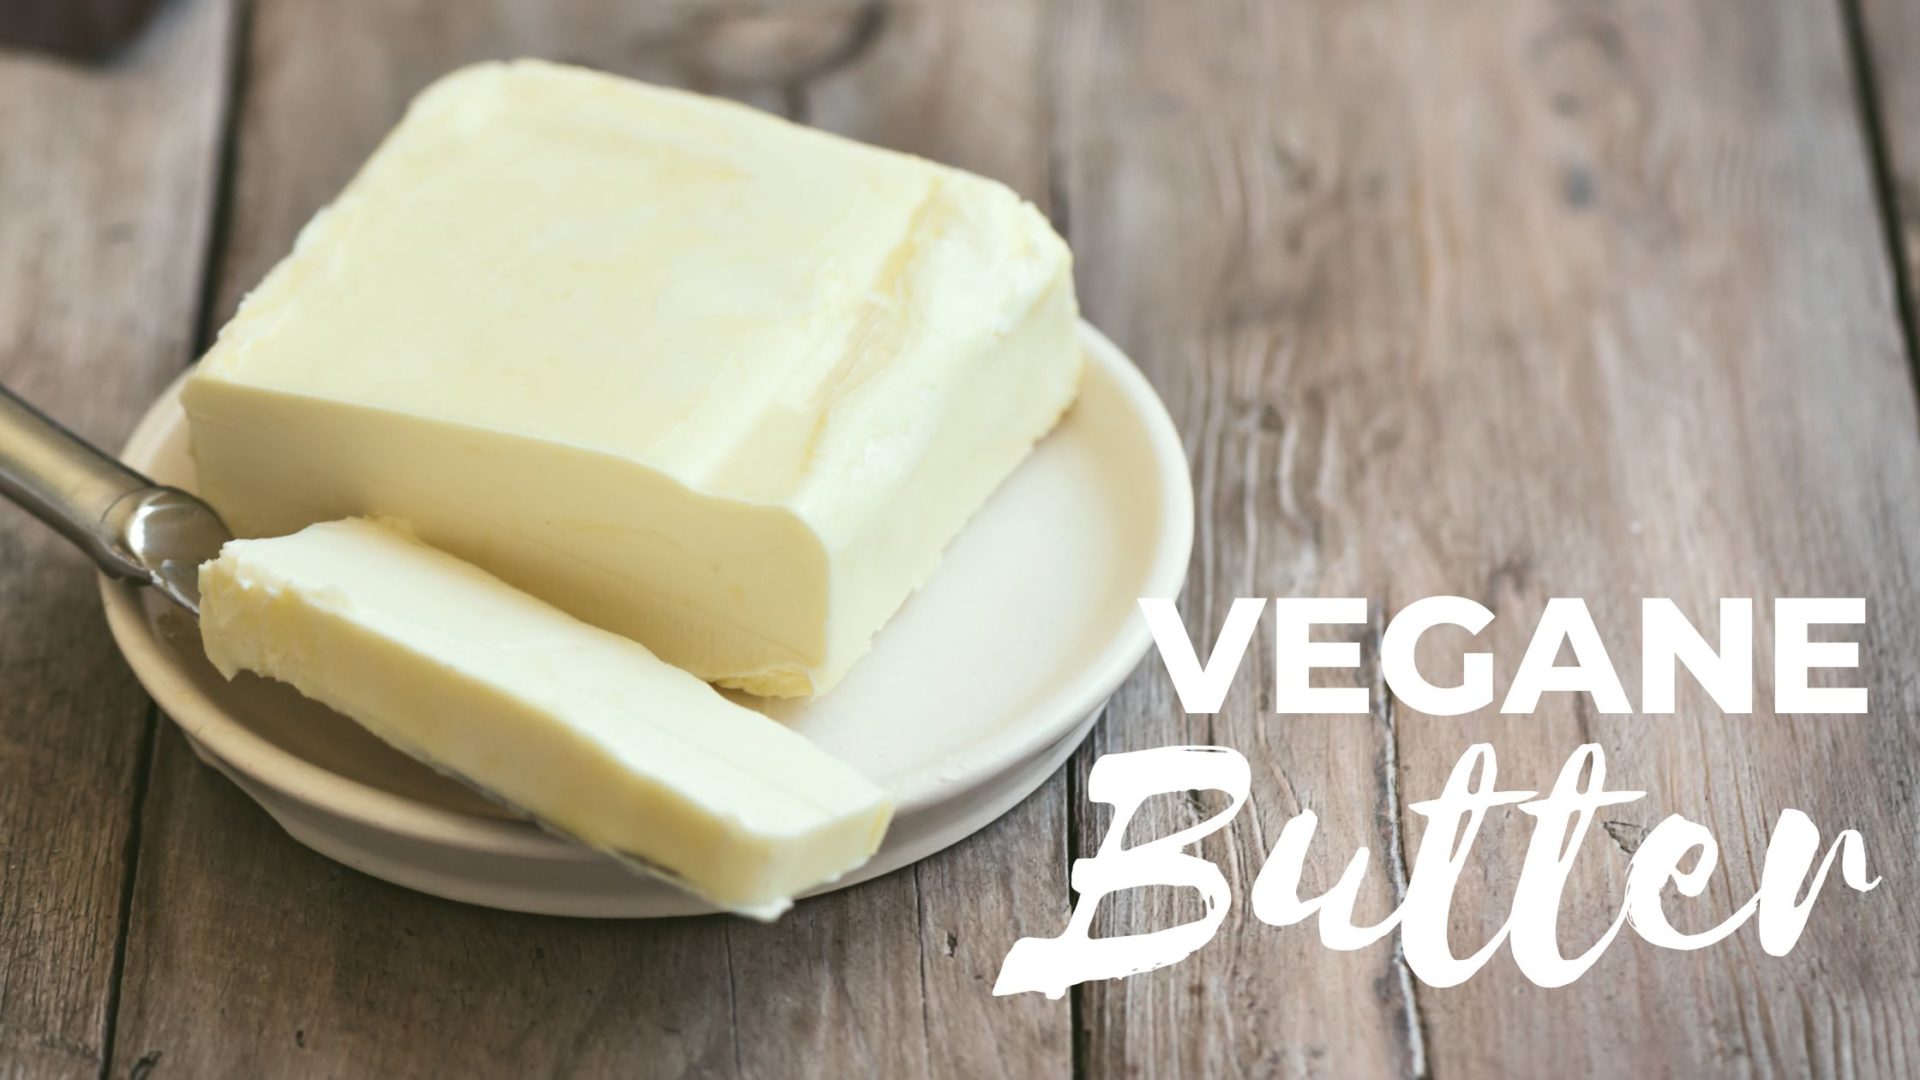 Vegane Butter - Produktvergleich